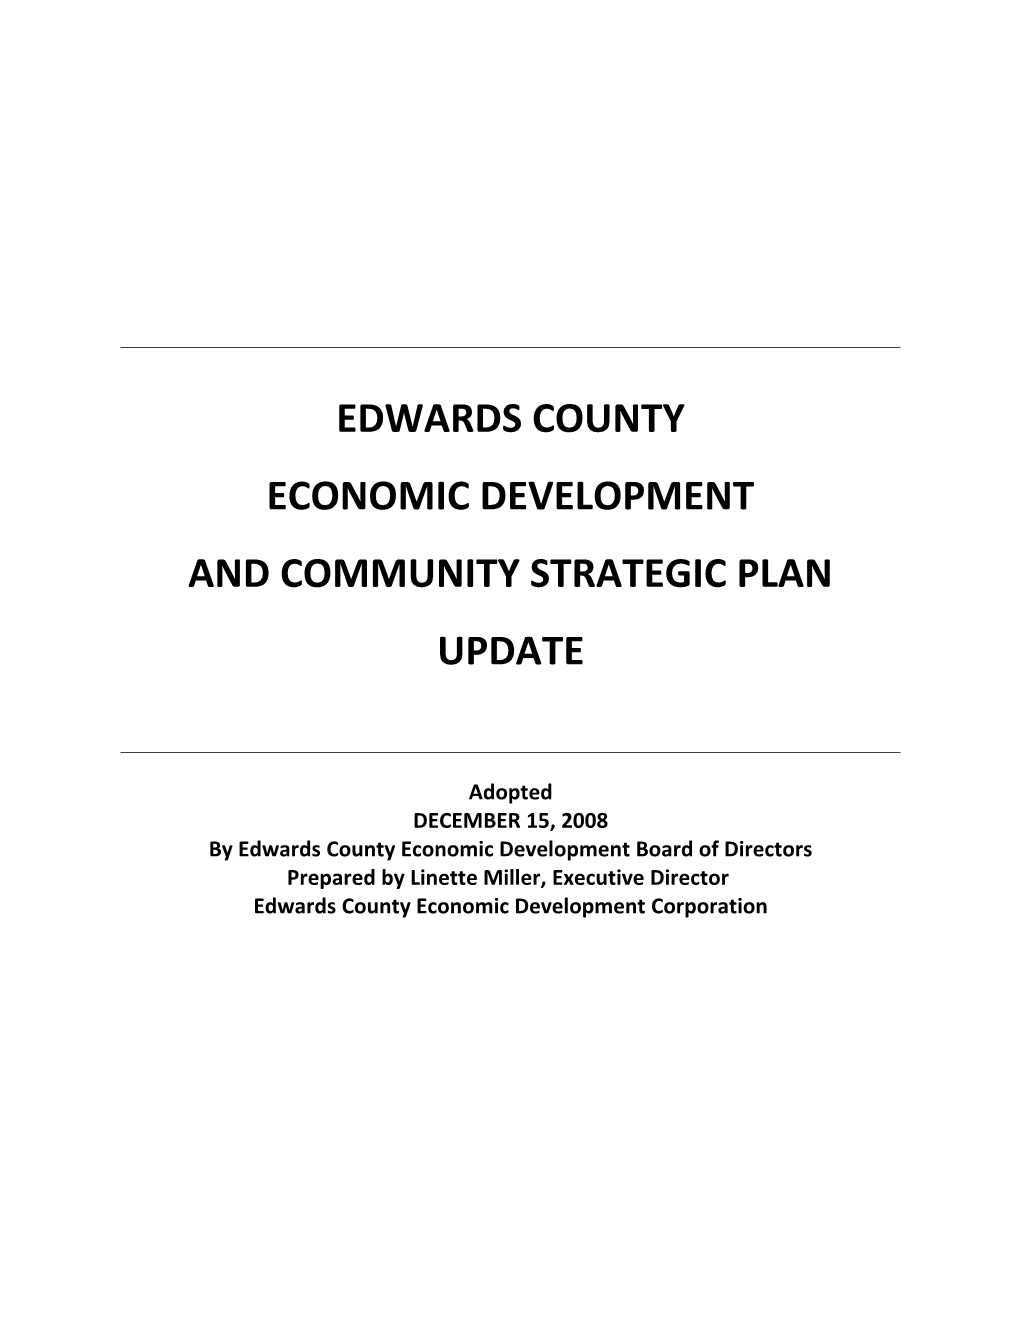 And Community Strategic Plan